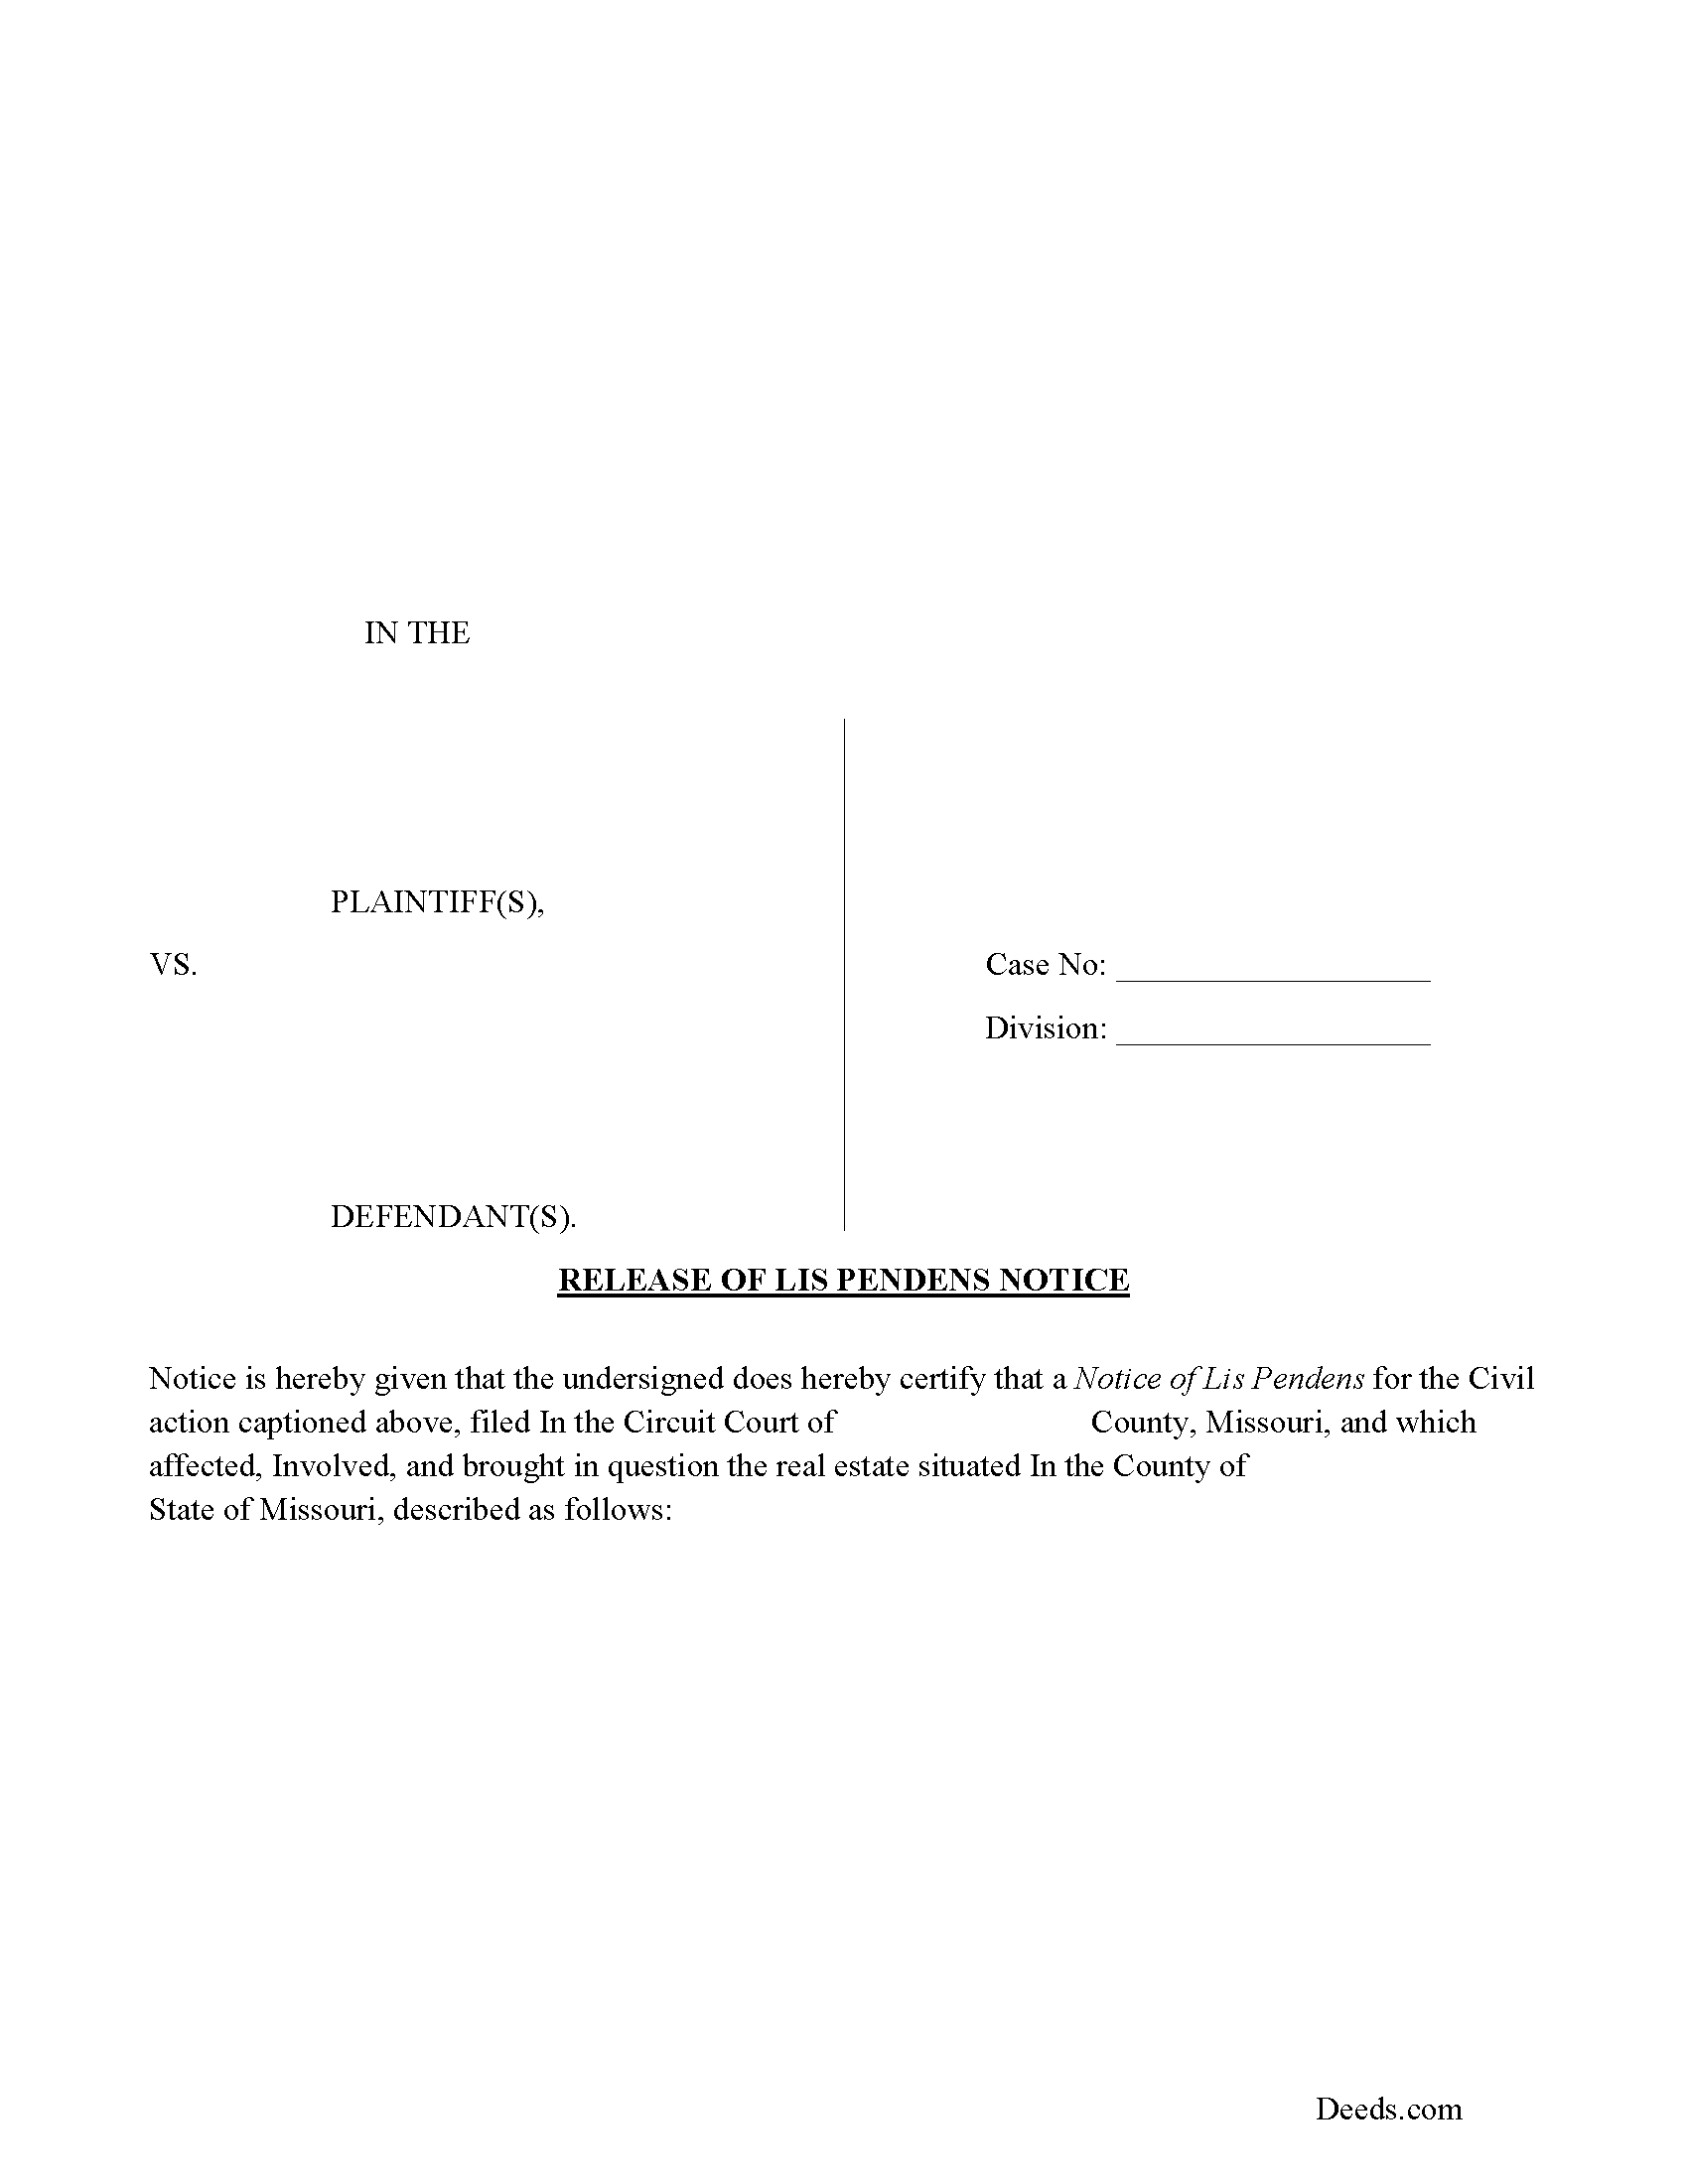 Missouri Release of Lis Pendens Notice Image